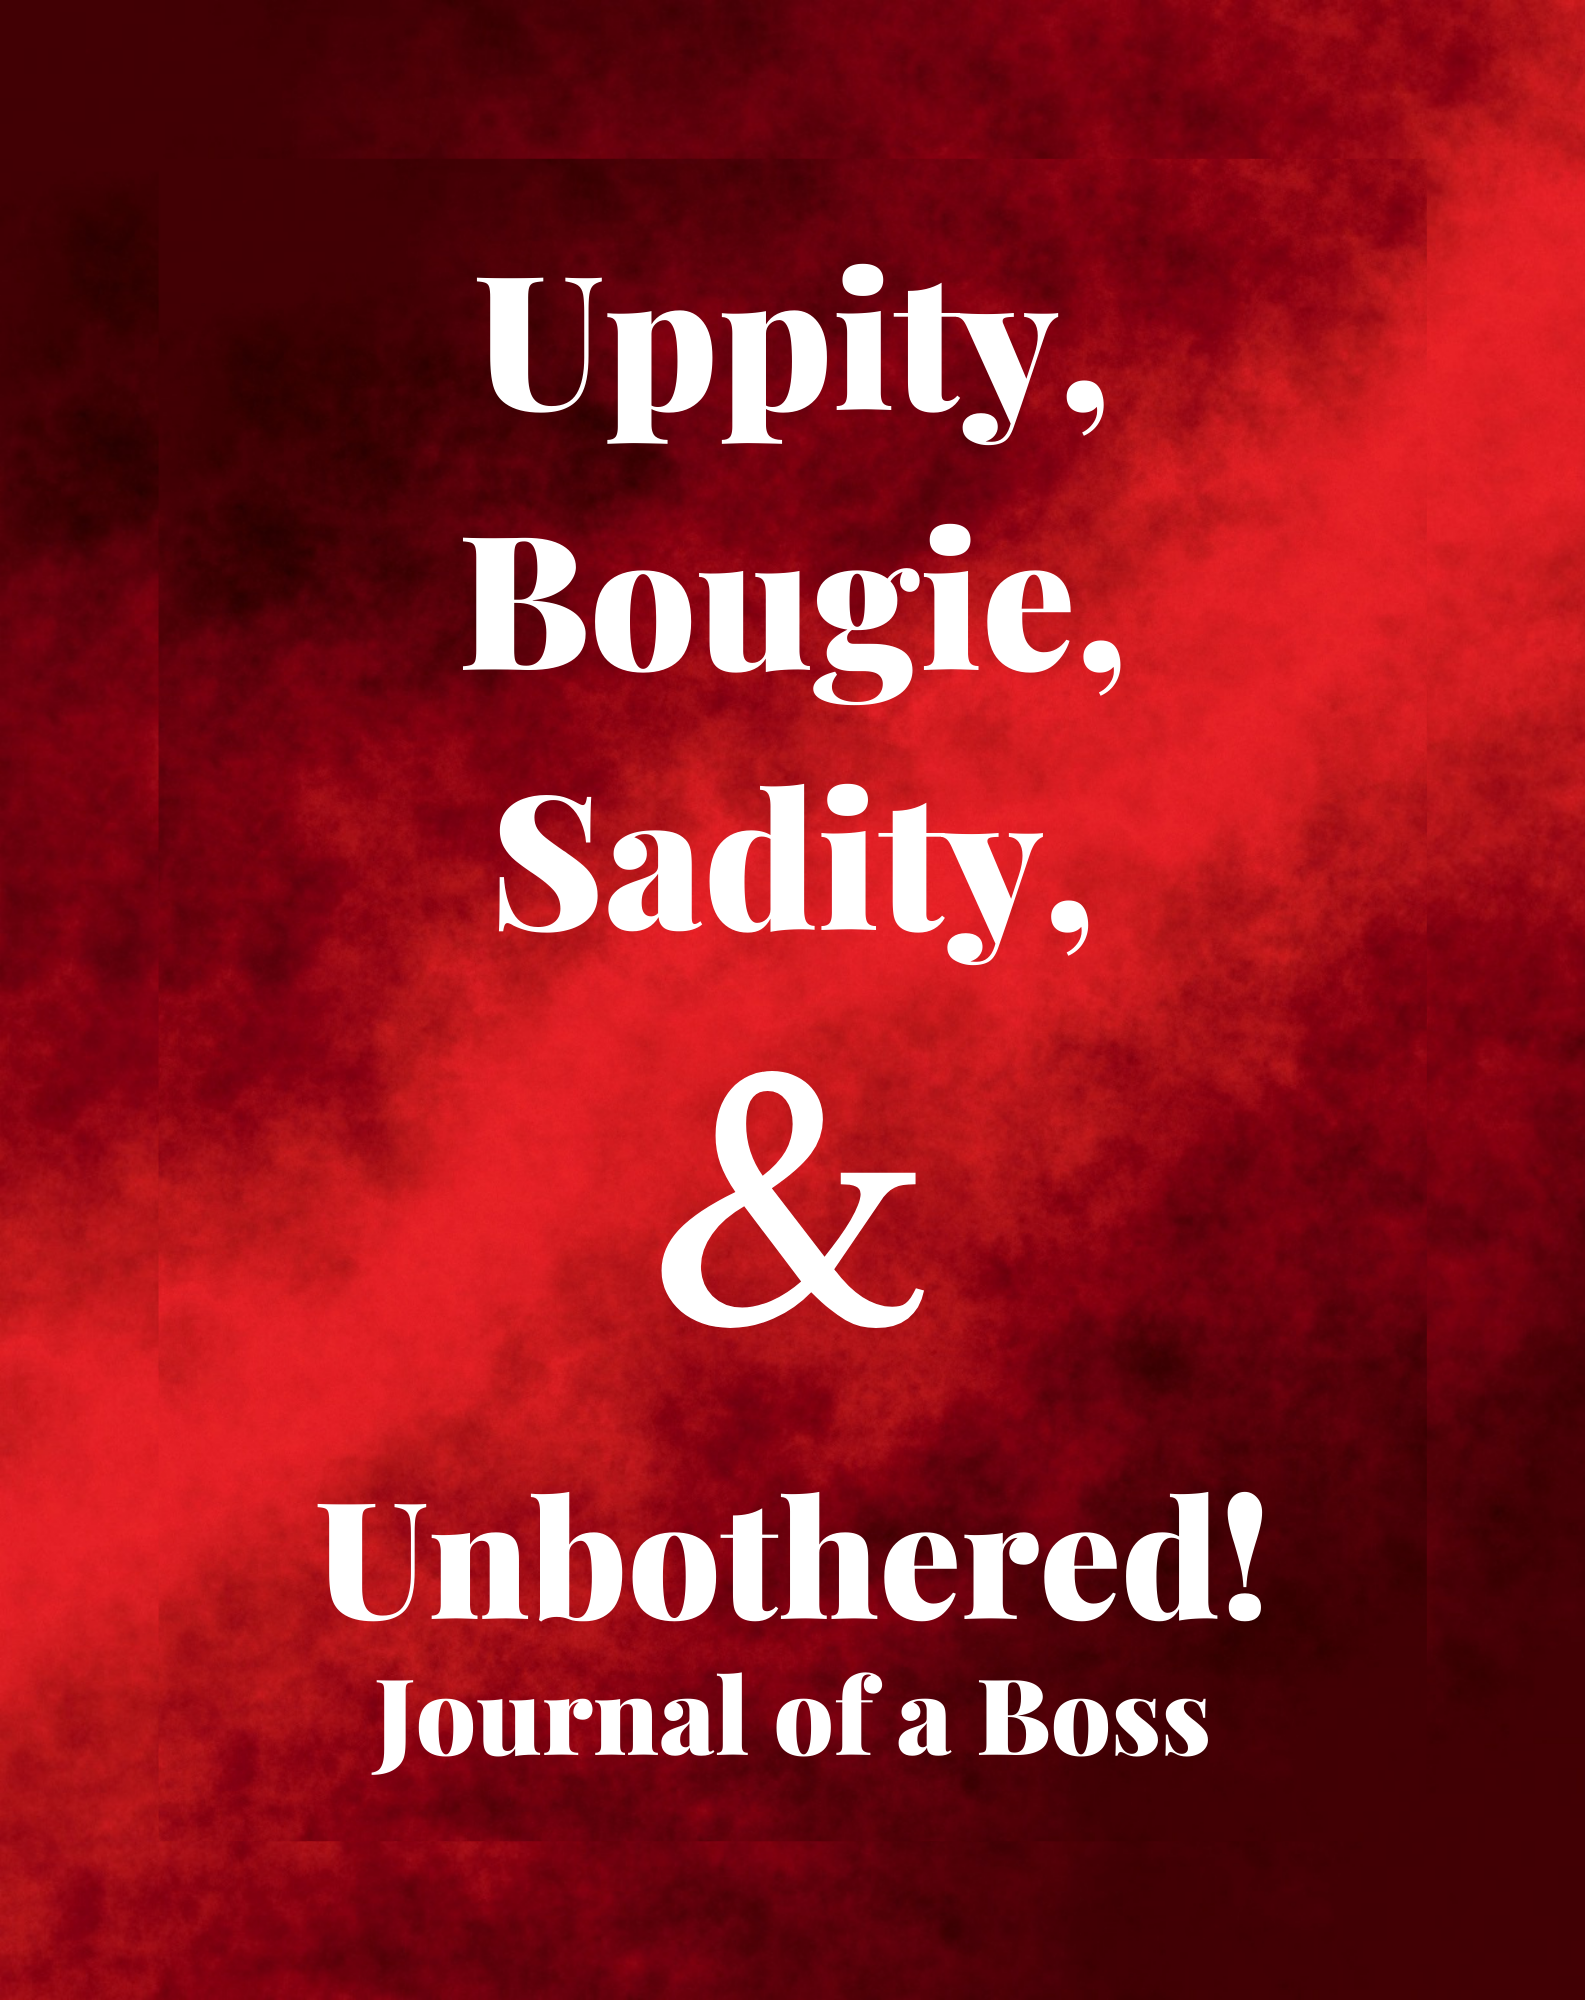 Uppity, Bougie, Sadity and Unbothered